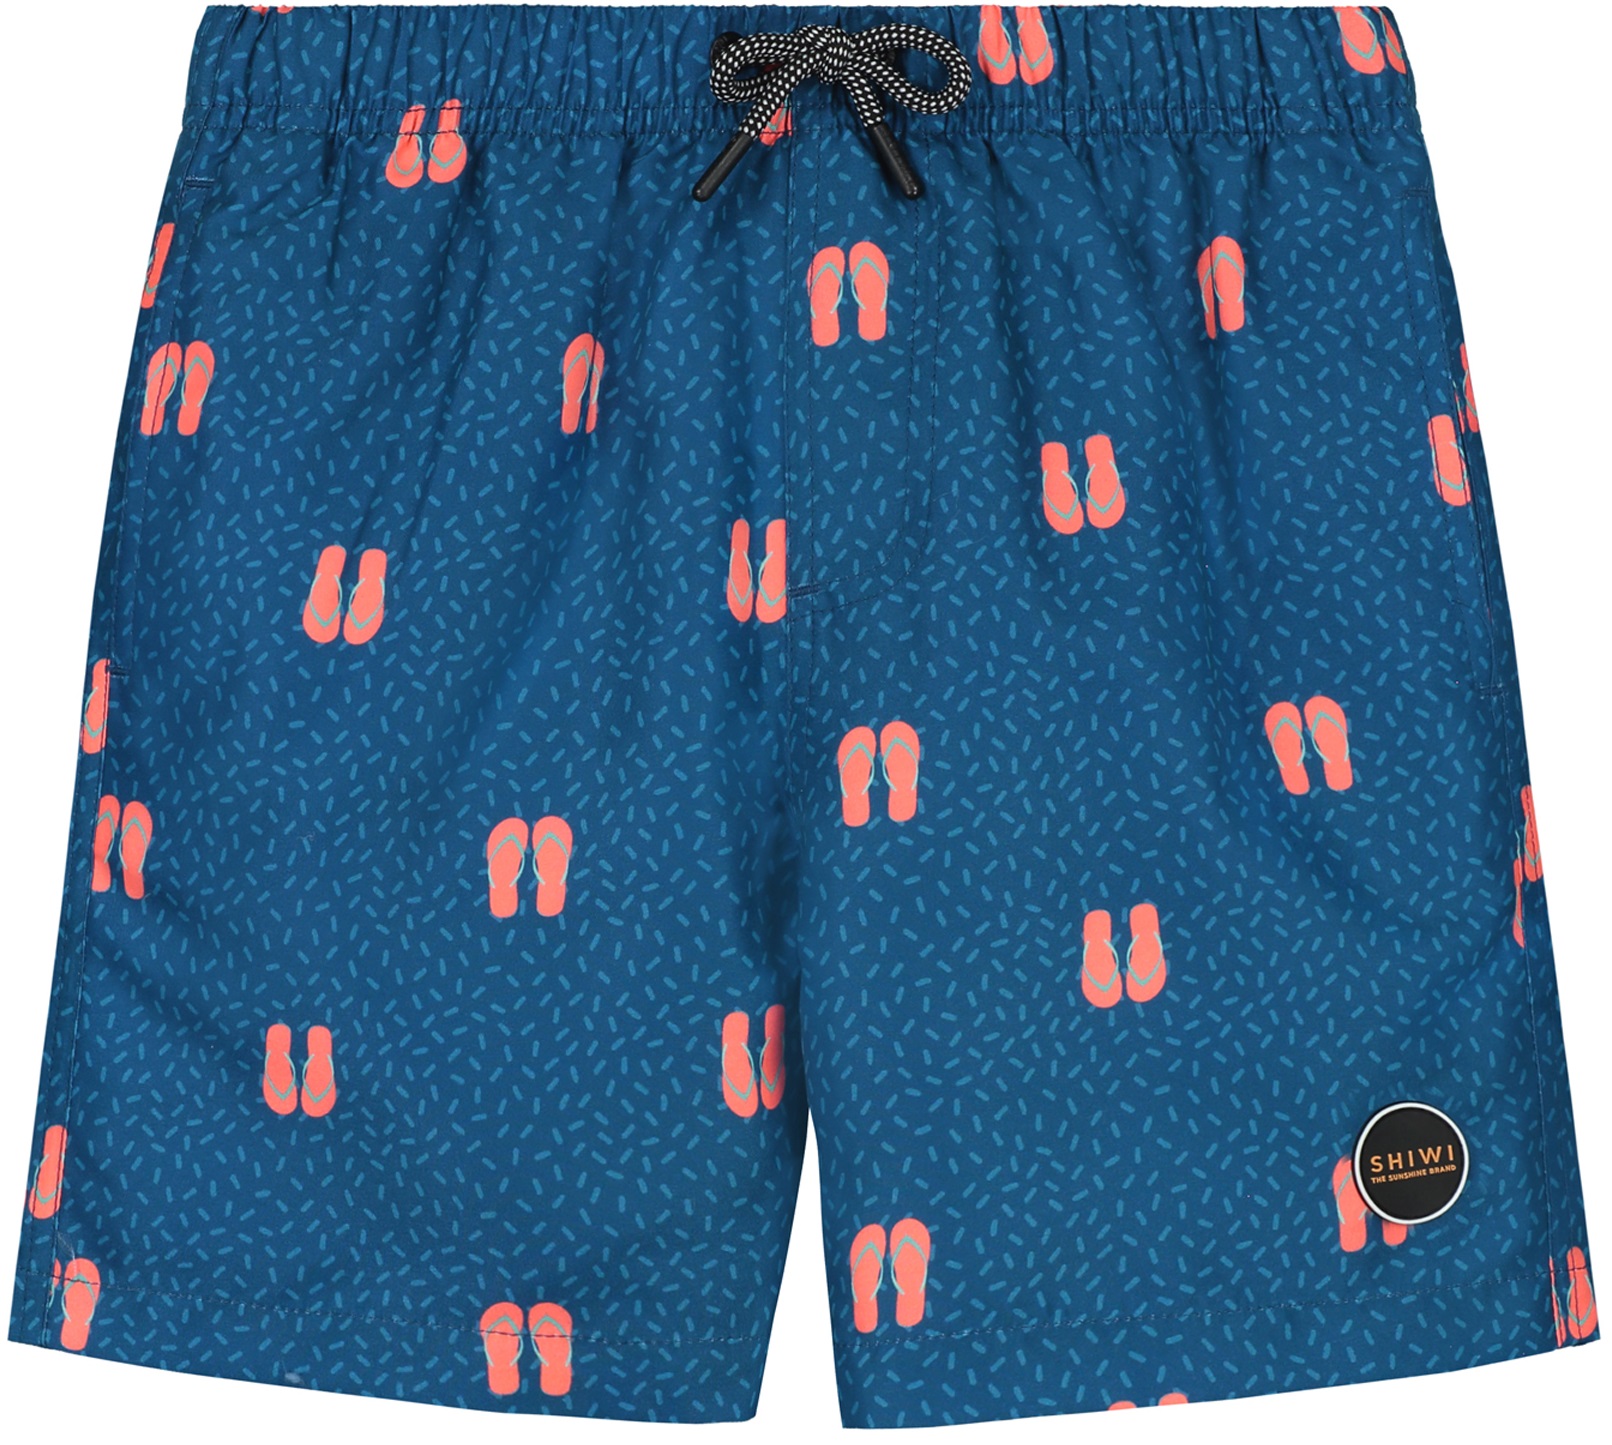 Shiwi Boys swim shorts 2441110228-614